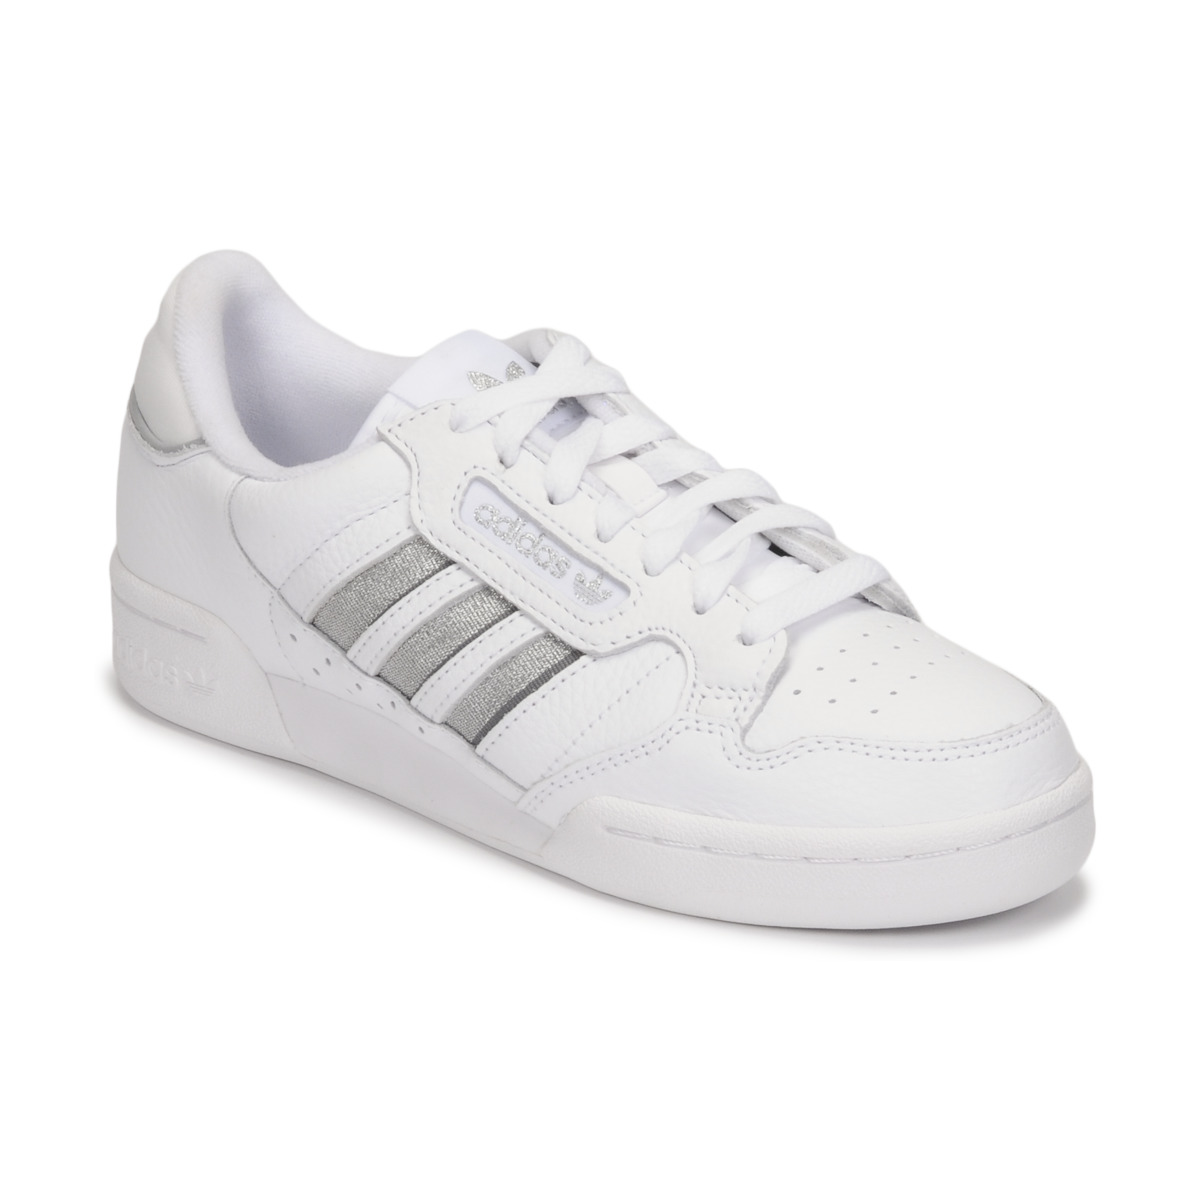 Schuhe Damen Sneaker Low adidas Originals CONTINENTAL 80 STRI Weiß / Silber